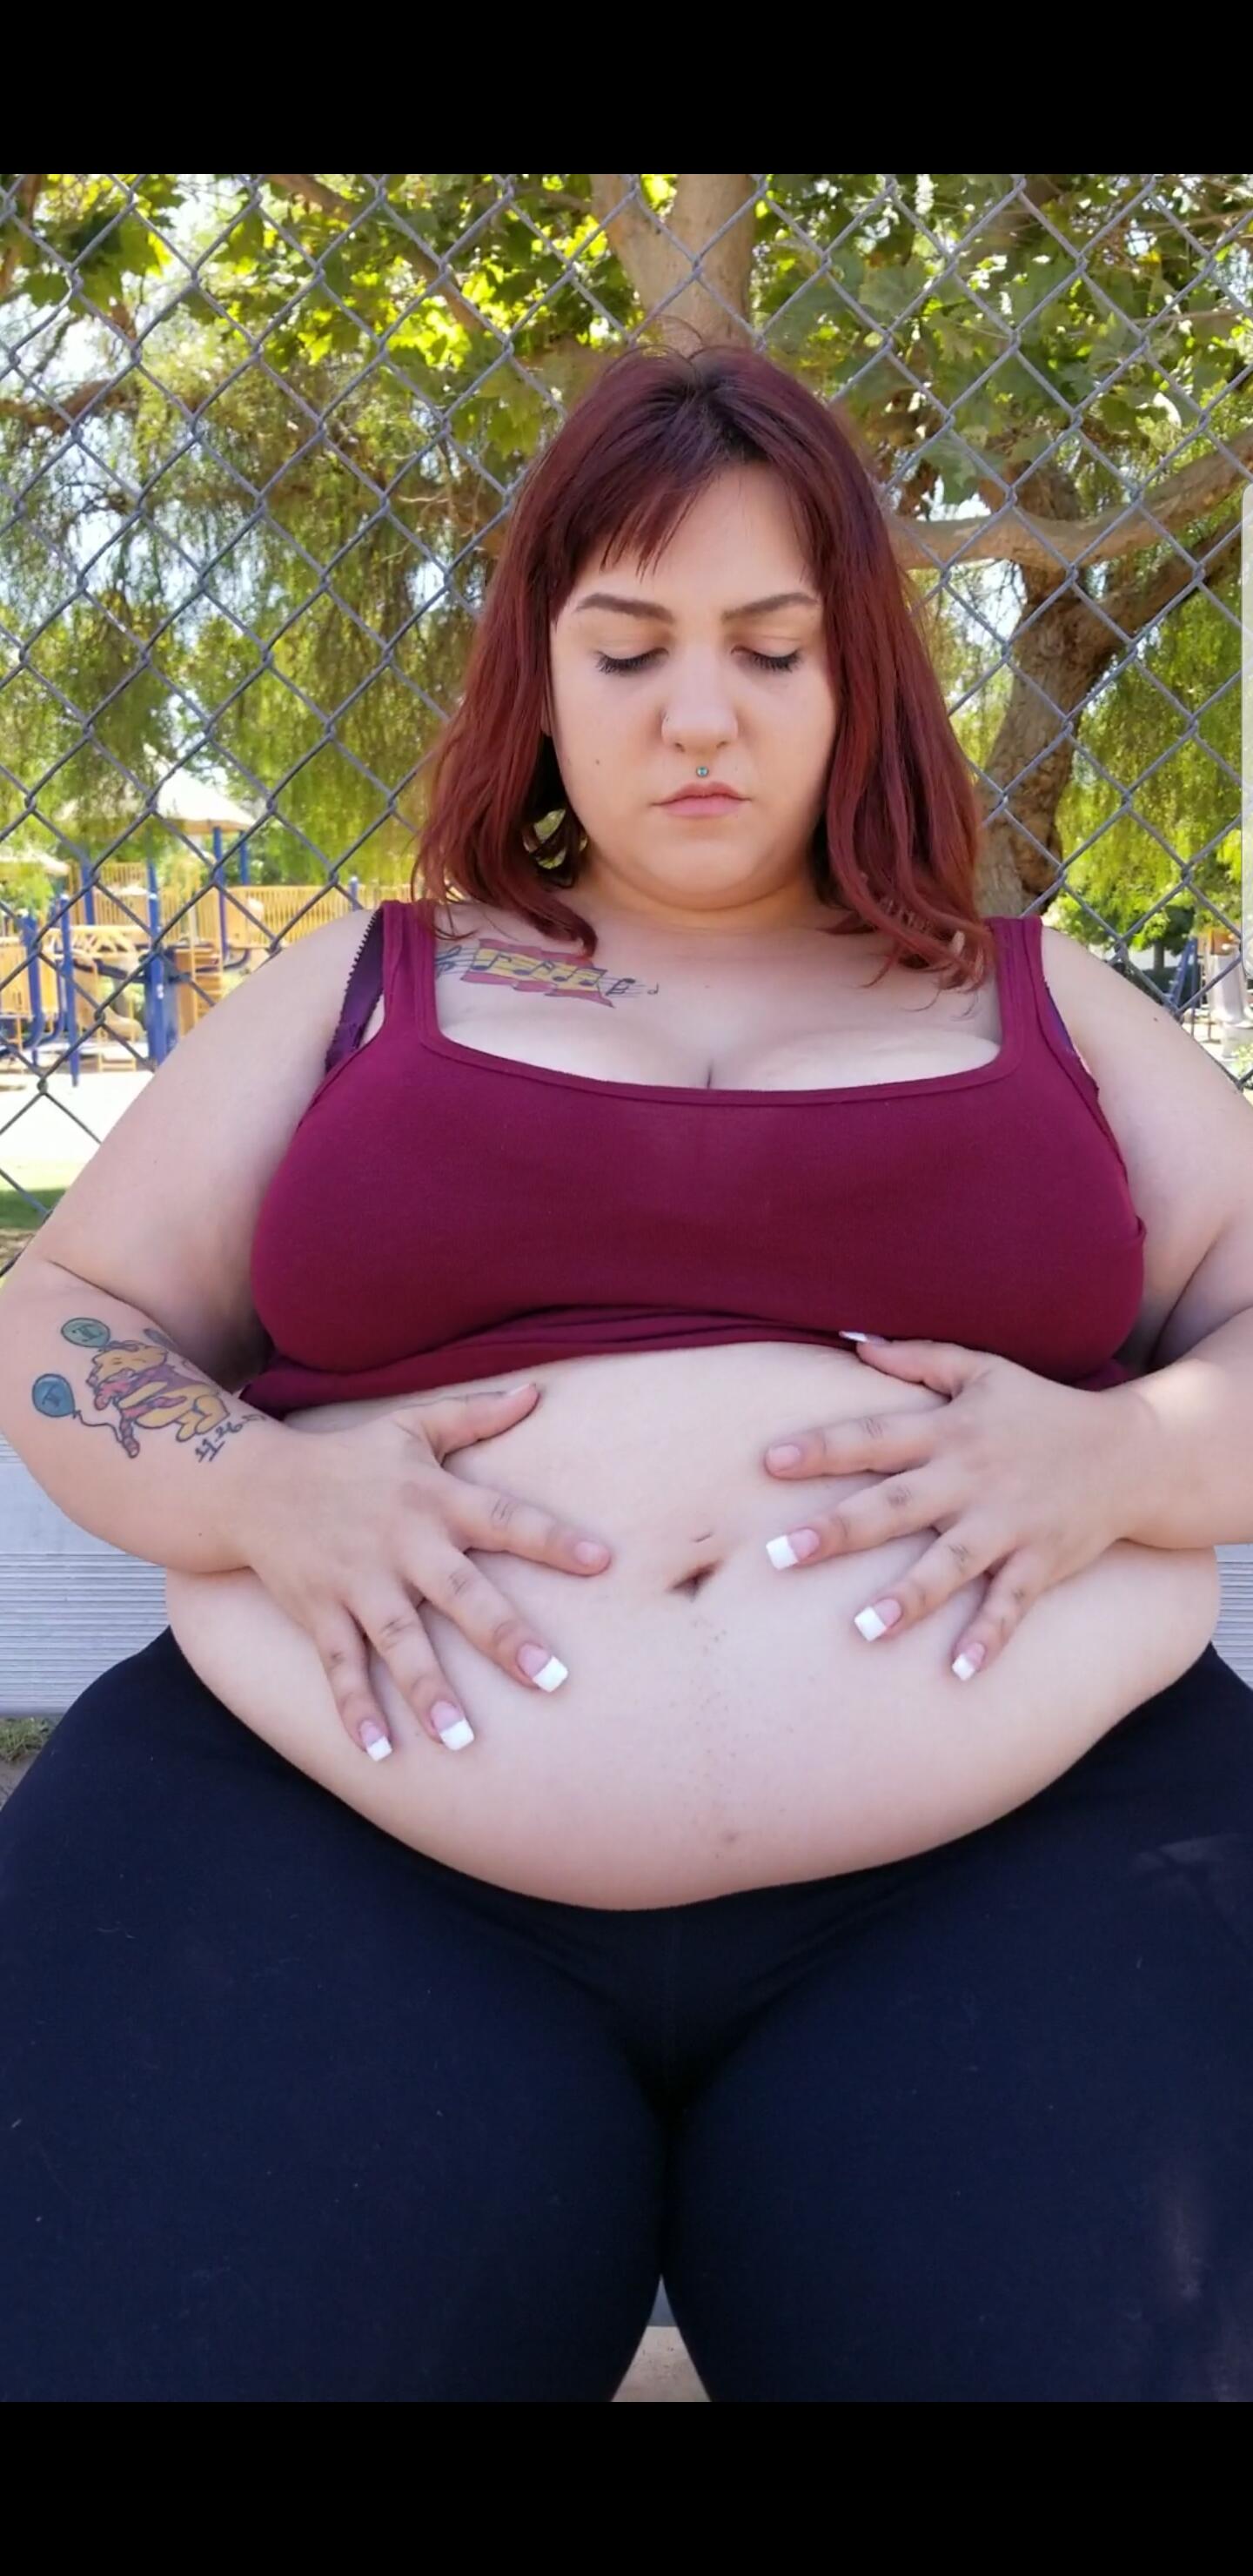 Ebony Plump Belly - Fat Chubby Bbw Belly Play - Best Sex Images, Hot XXX Photos and Free Porn  Pics on www.xxxsearch.net